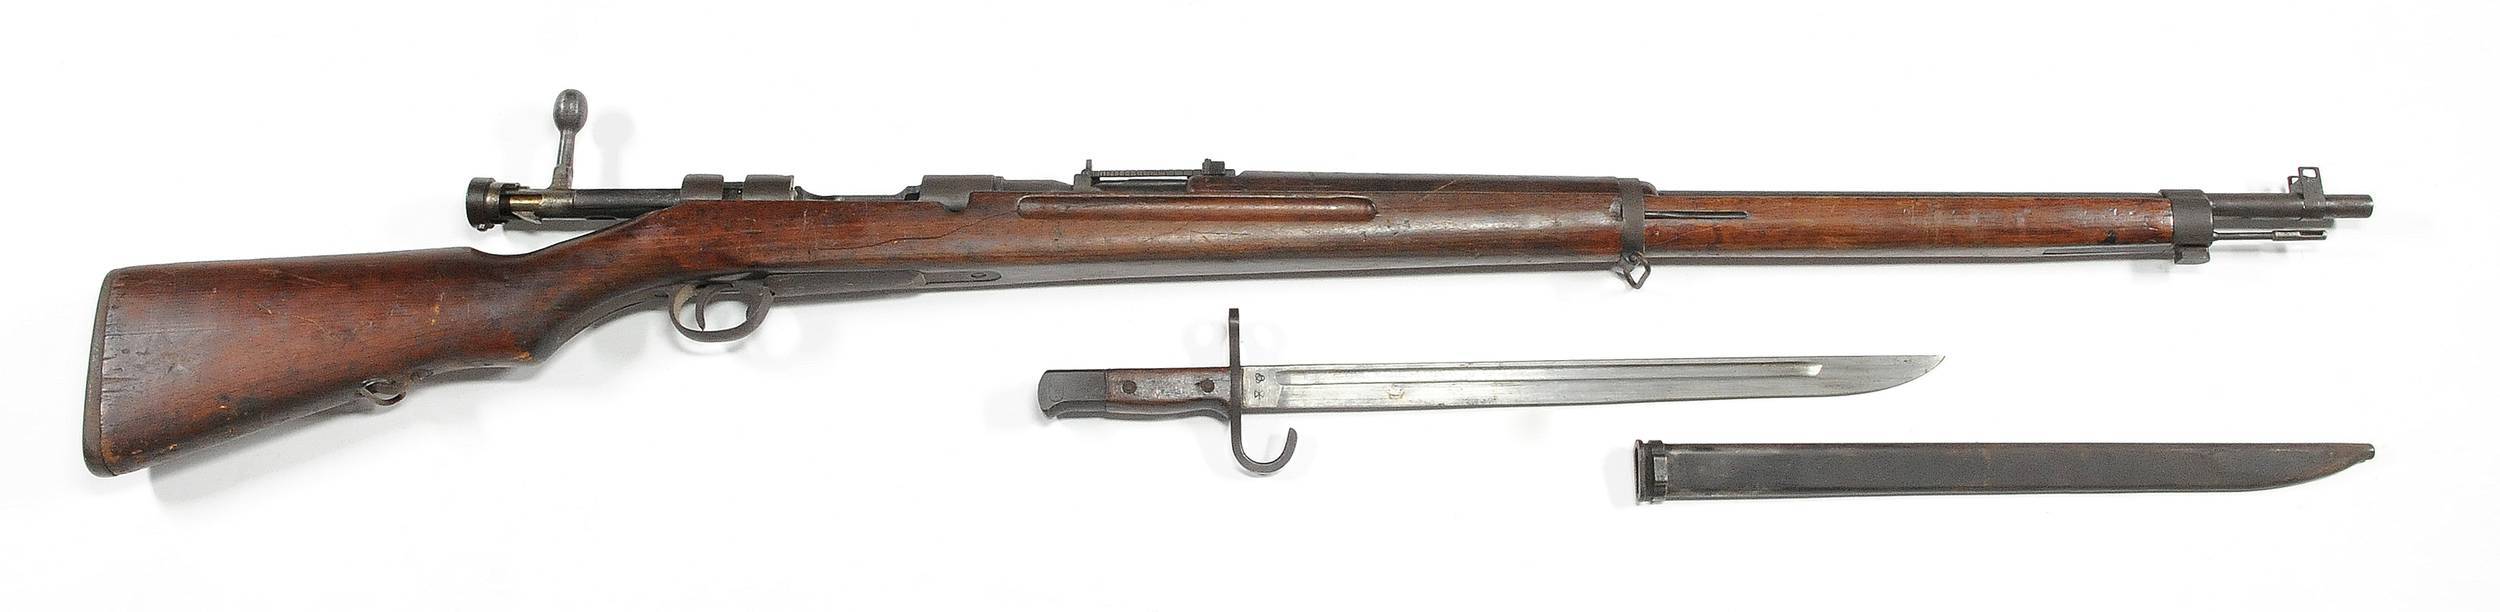 Тип 99 винтовки - type 99 rifle